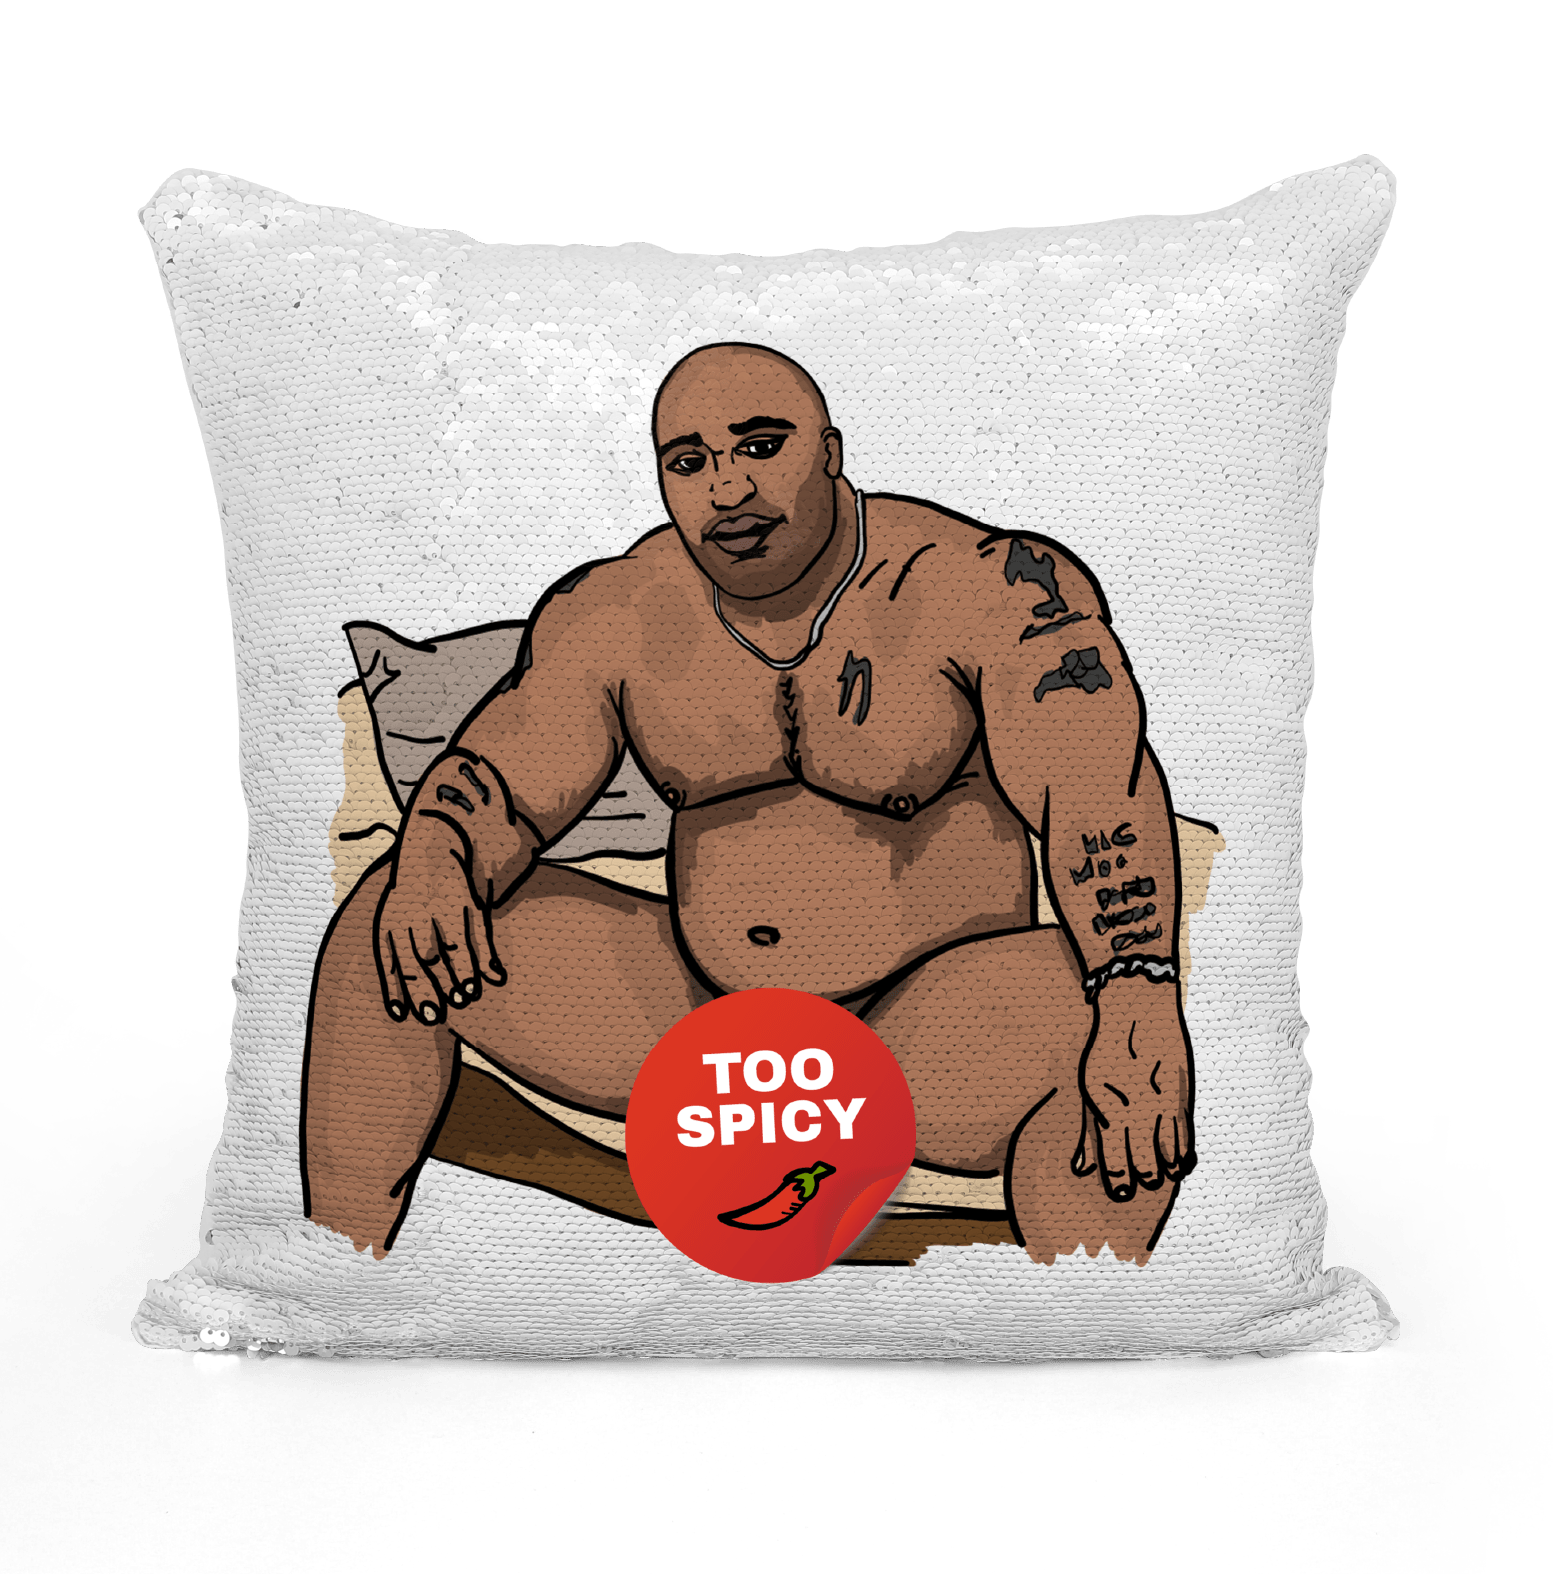 Big Barry UNCENSORED 🍆 - Magic Sequin Cushion